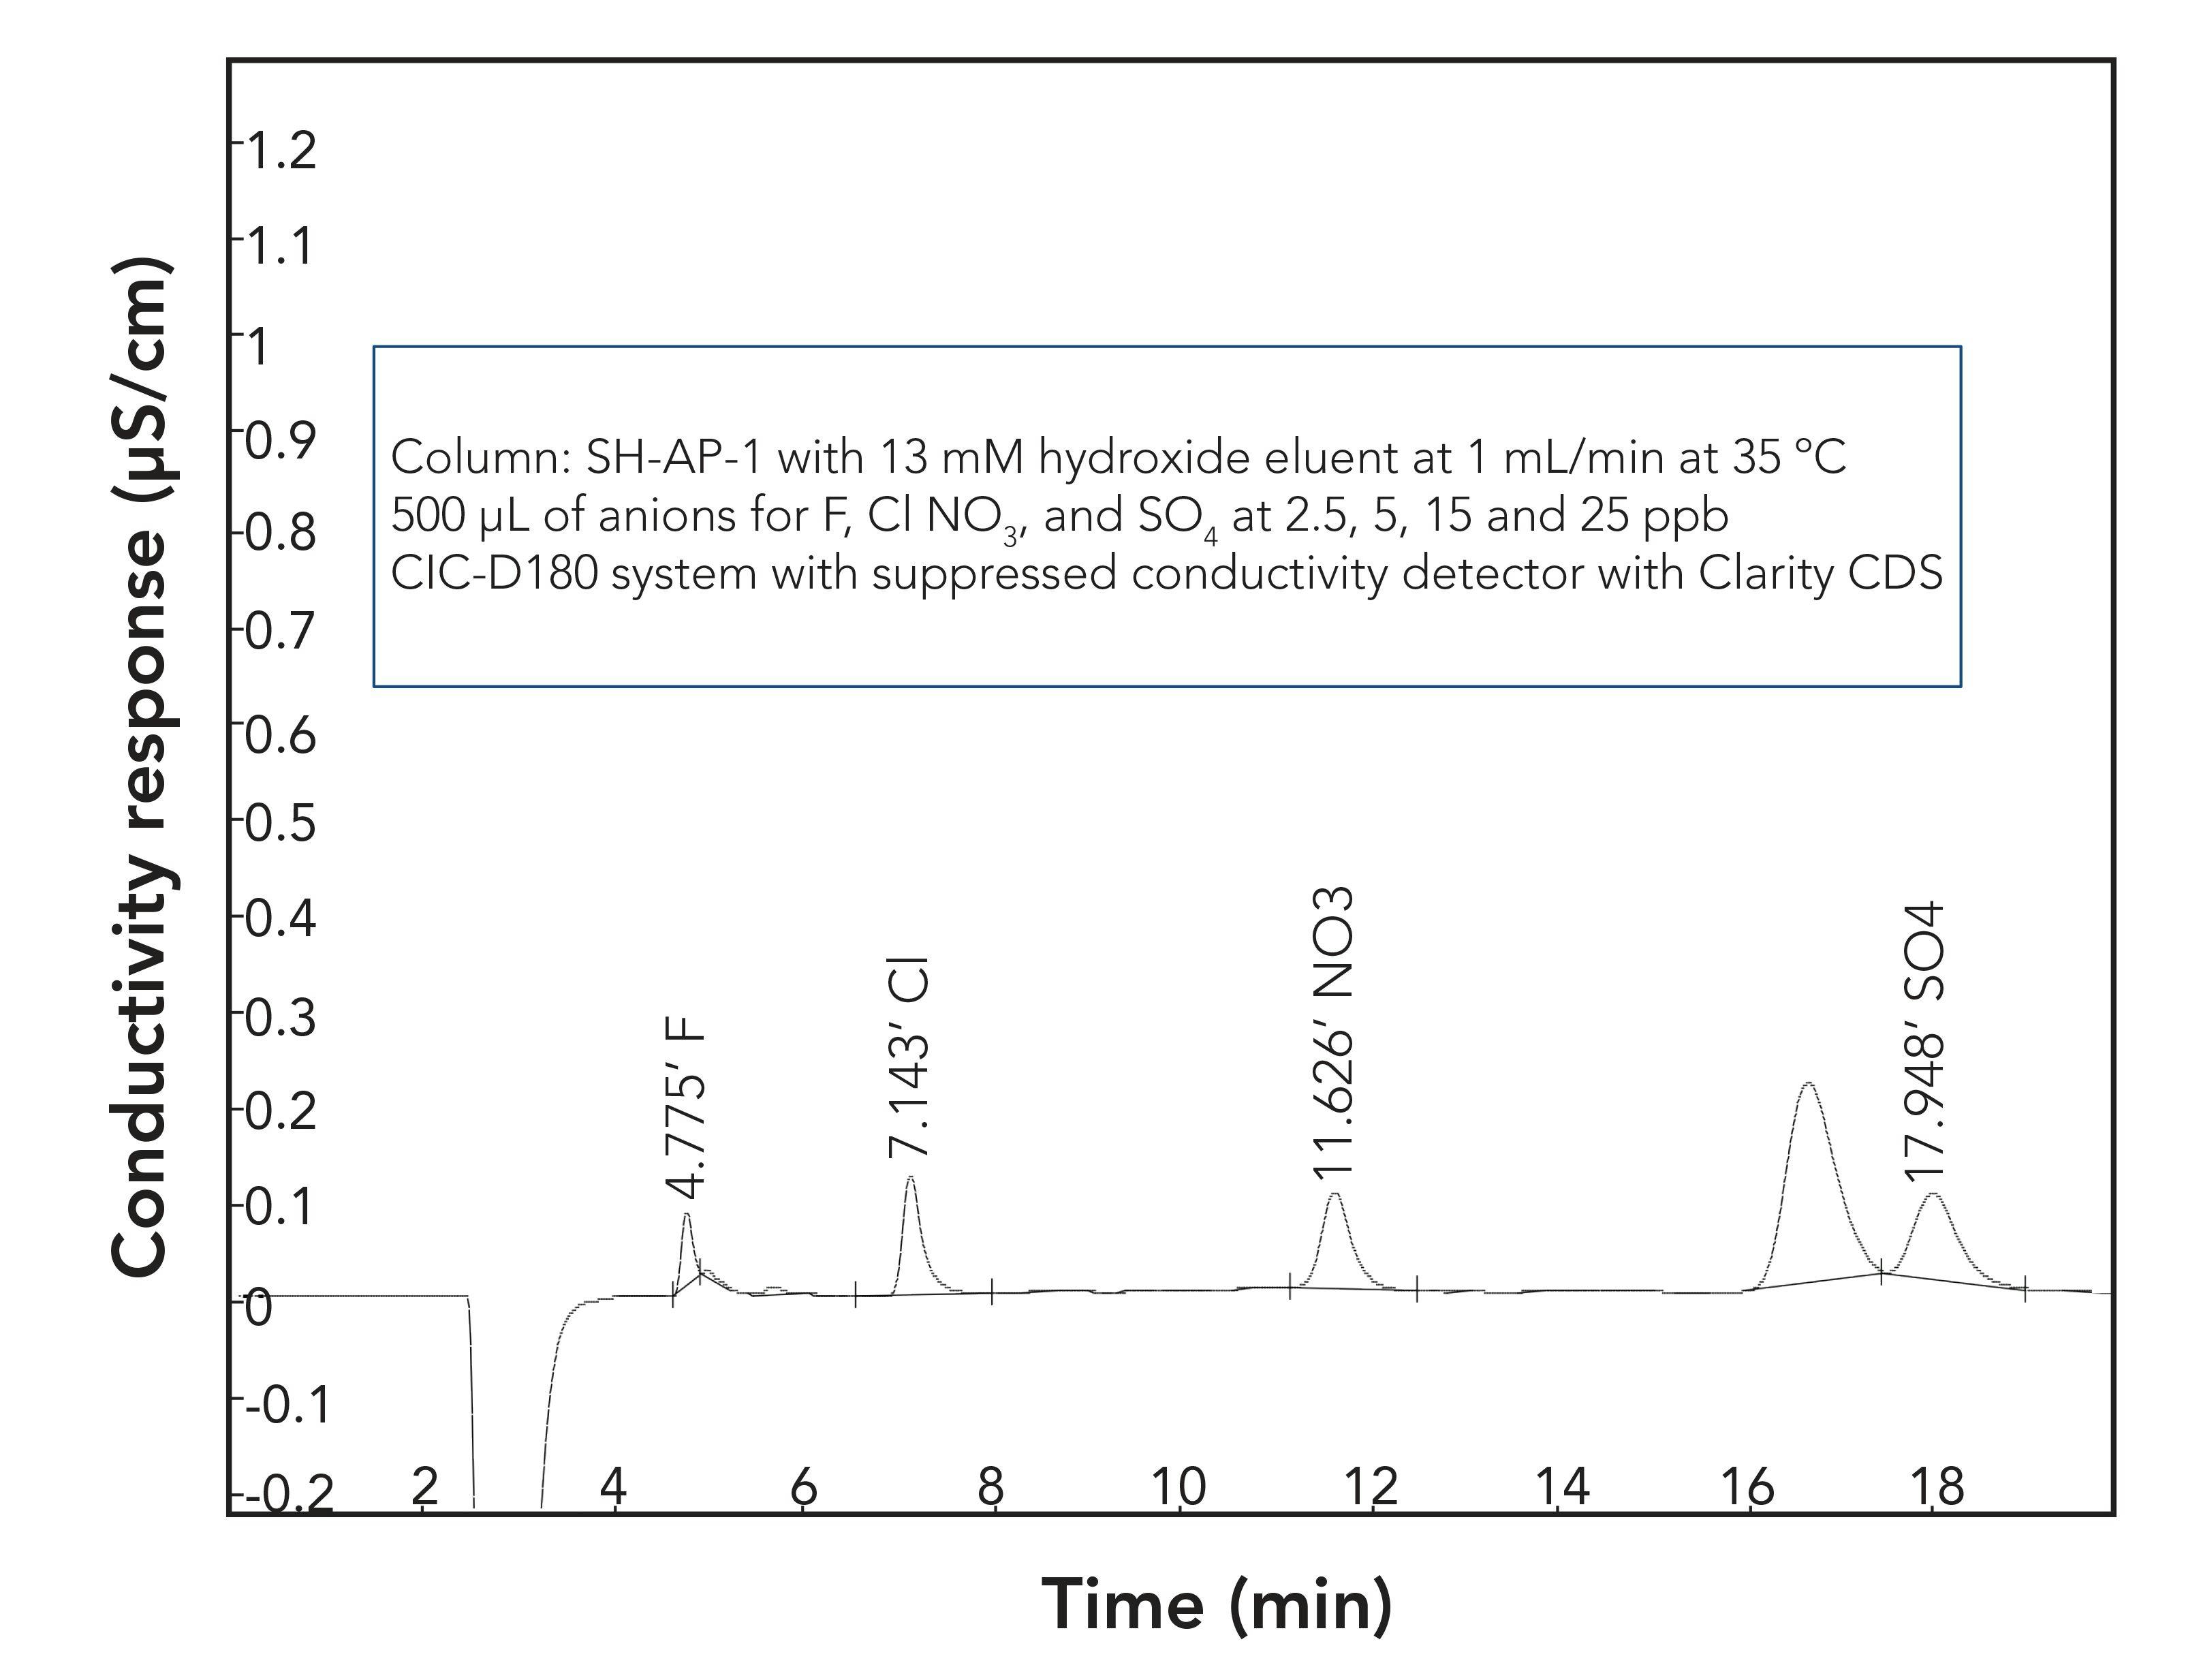 FIGURE 1: Chromatogram illustrating the sensitivity performance of the CIC-D180 in anion analysis.